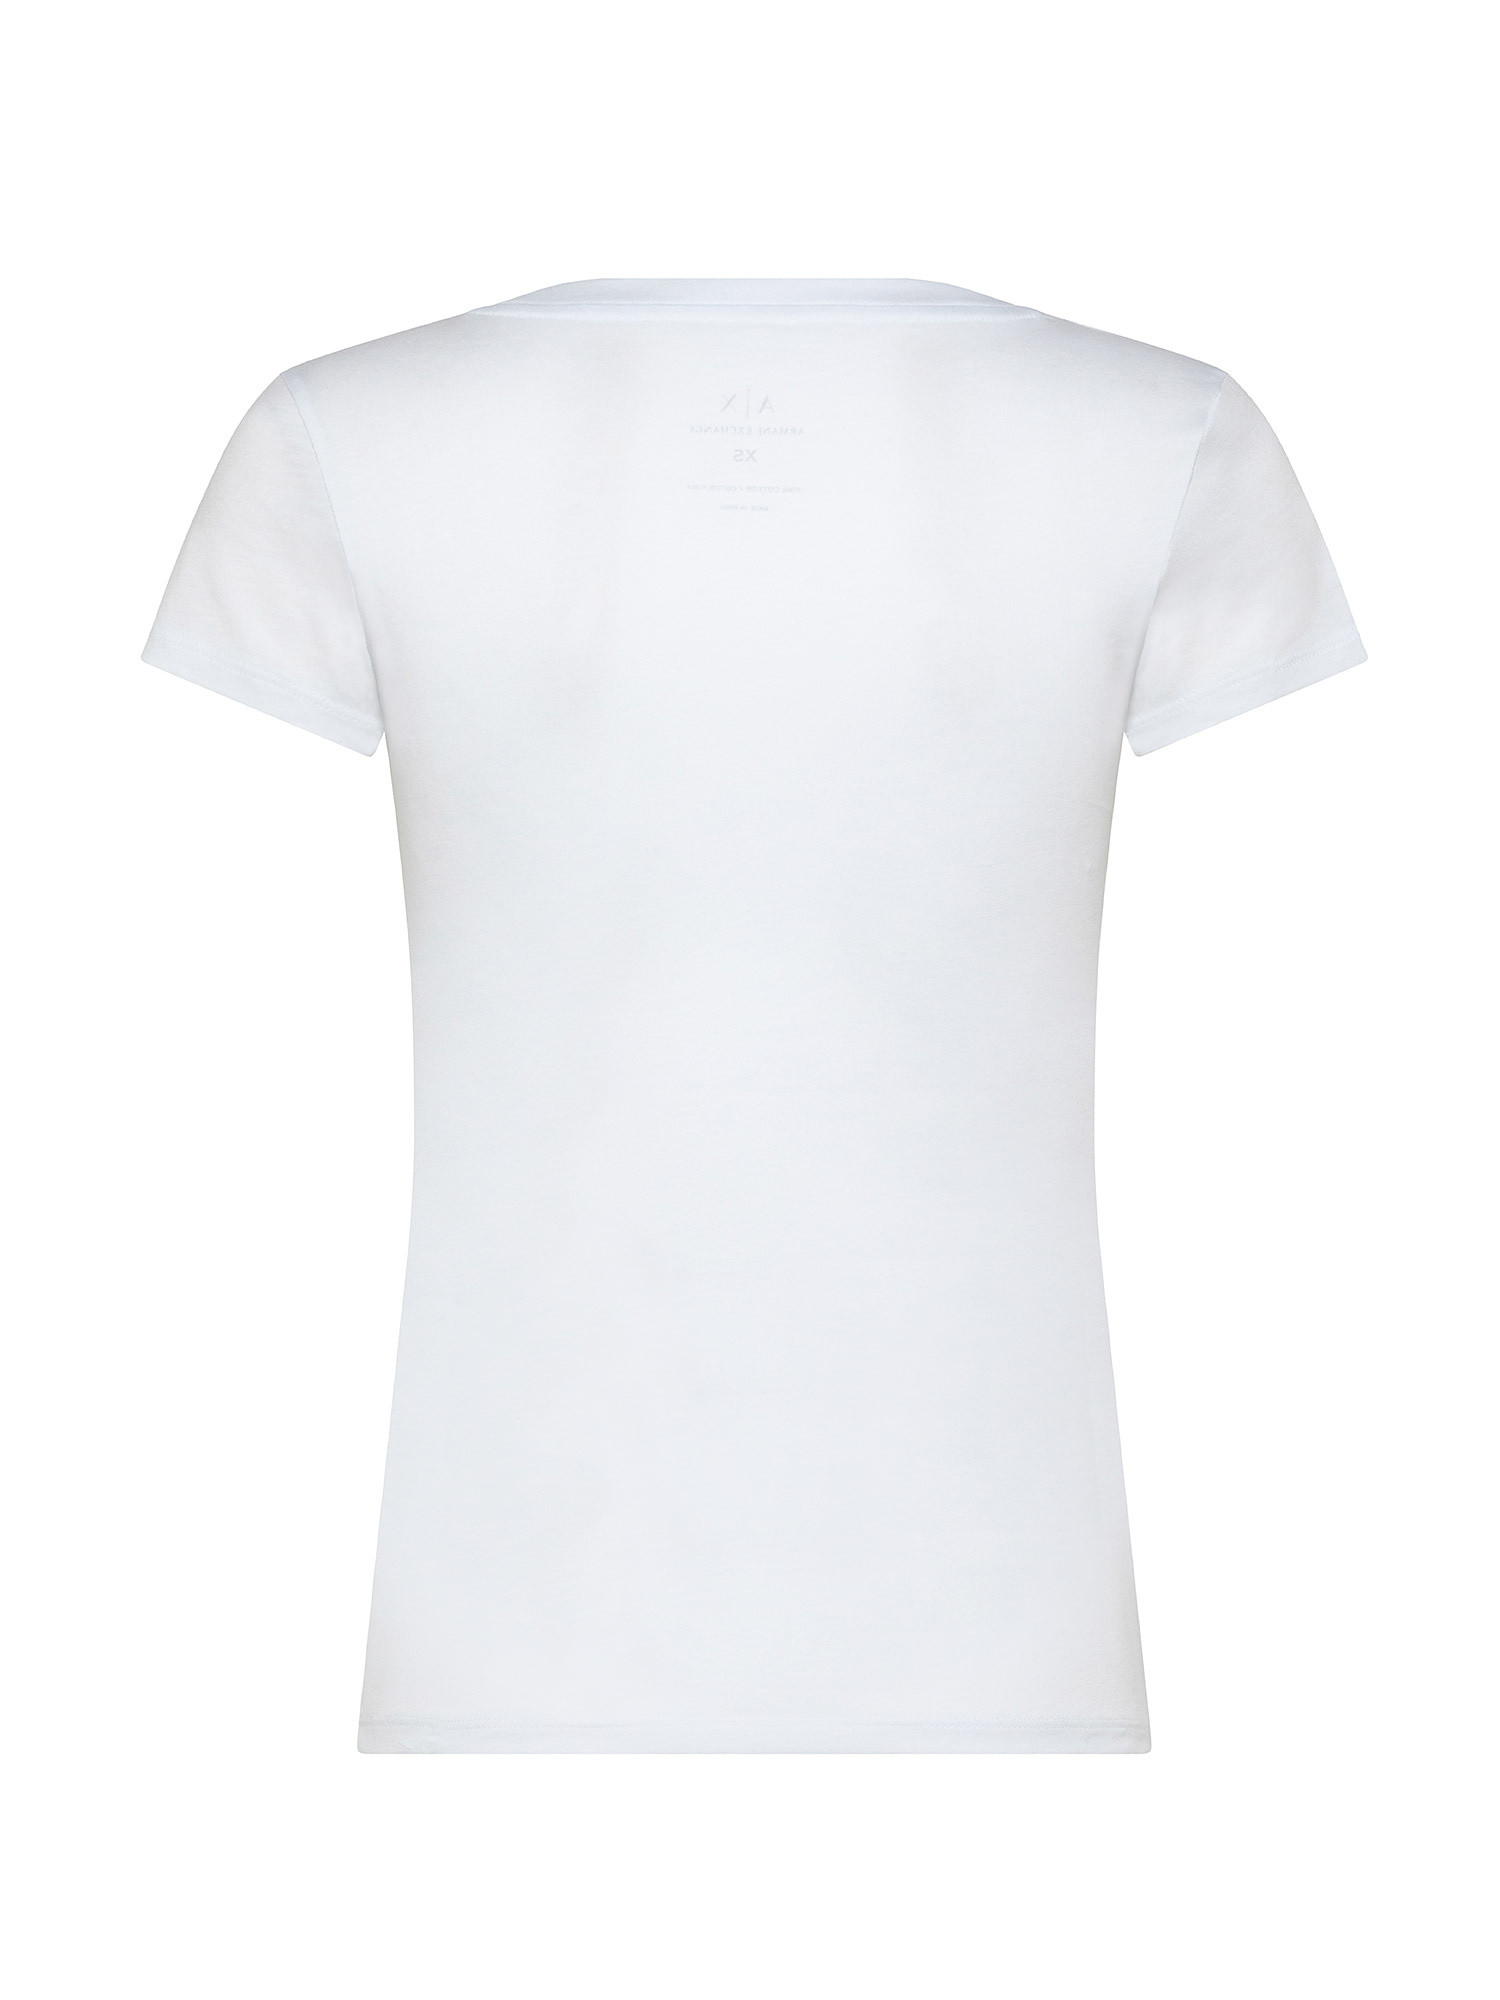 Boyfriend fit T-shirt, White, large image number 1